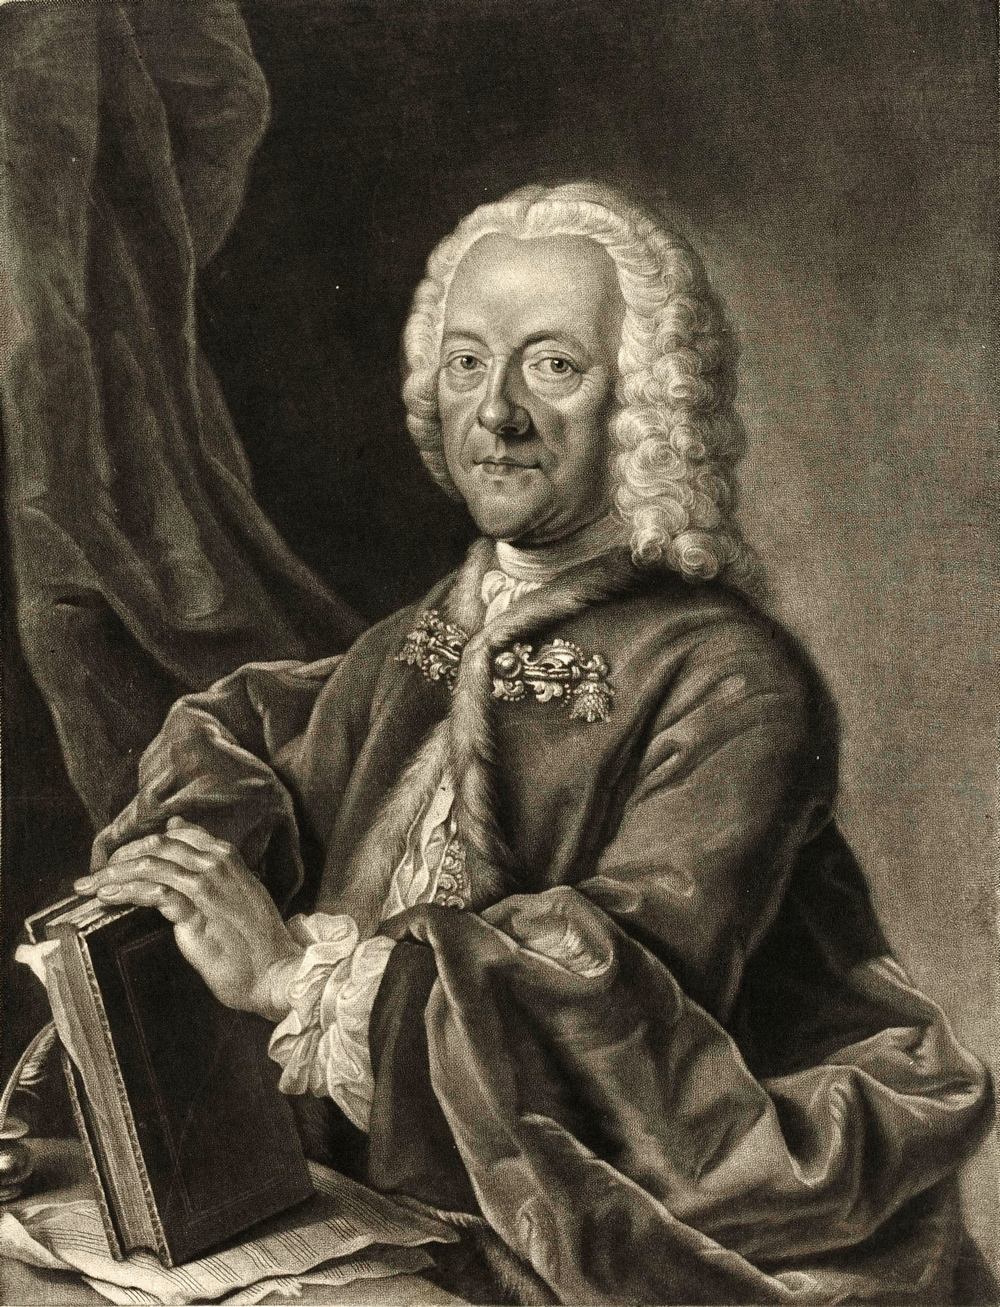 Georg Philipp Telemann